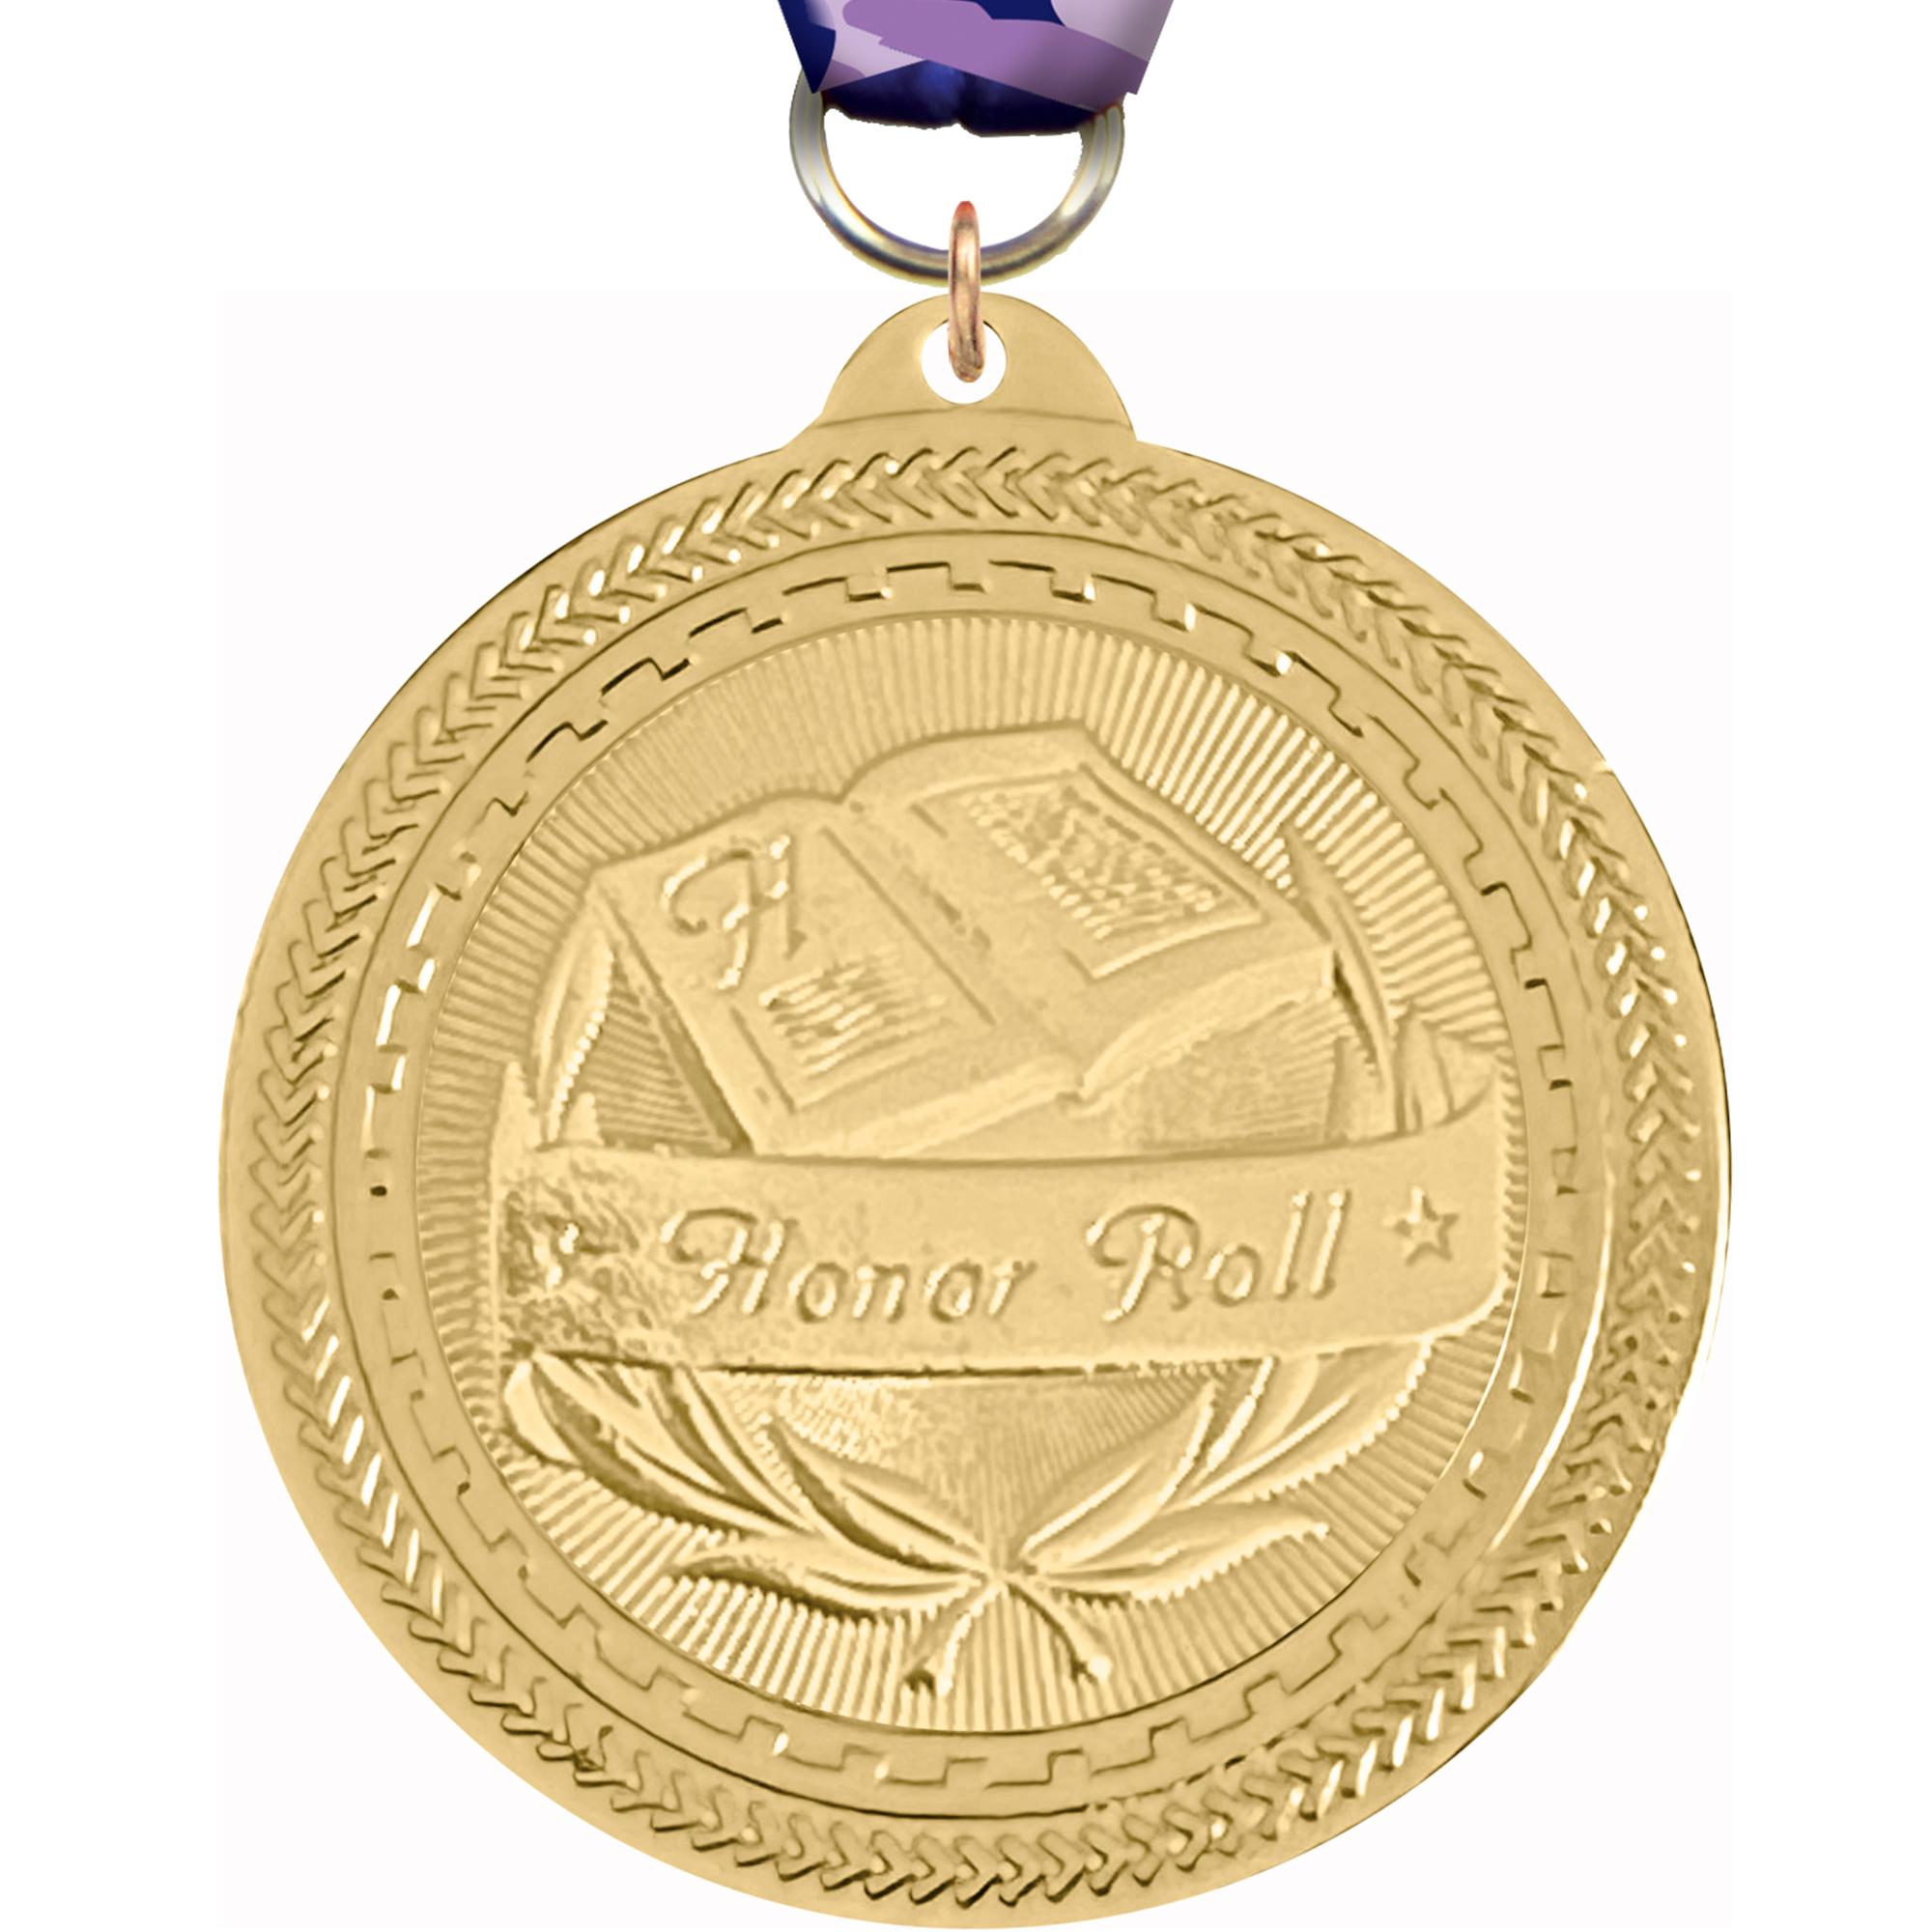 Honor Roll Britelazer Medal